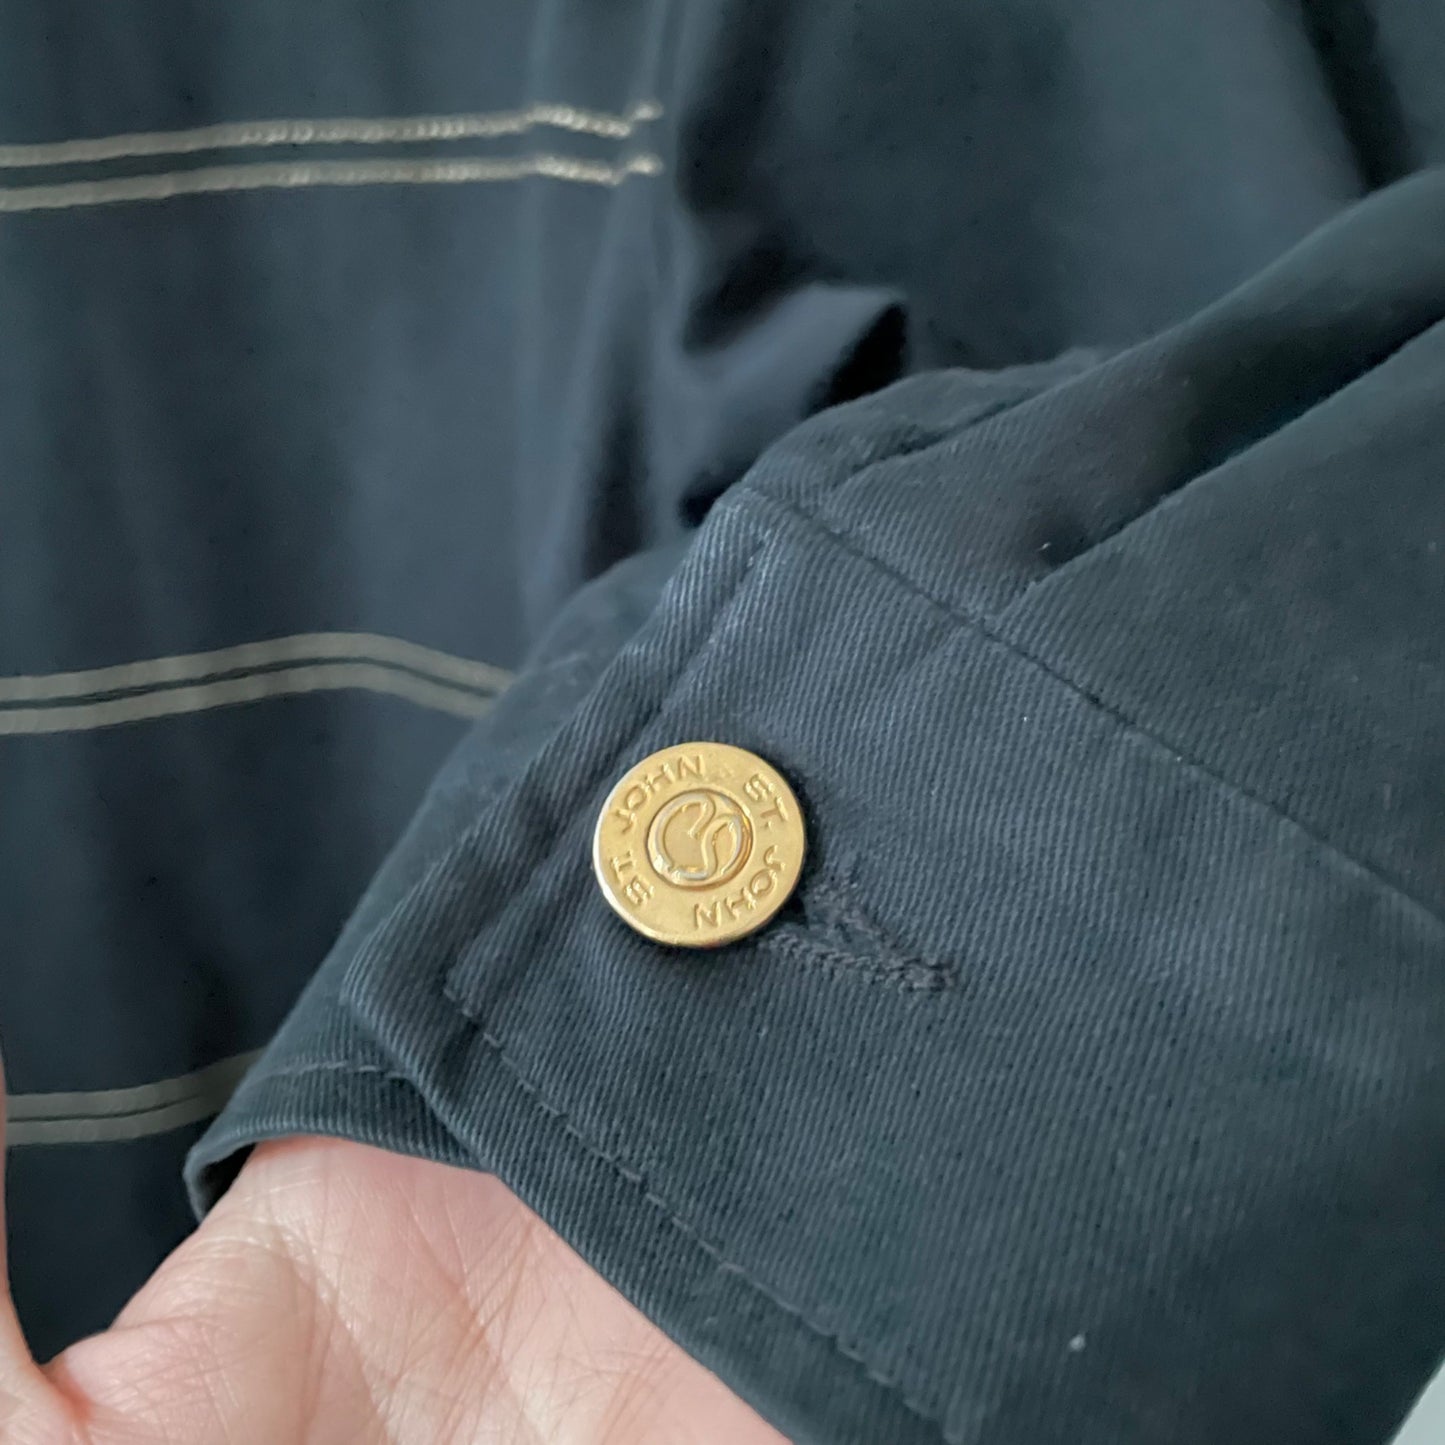 St. John Sport Dark Navy Toggle Up Jacket Size Petite 2P Classic Gold Hardware